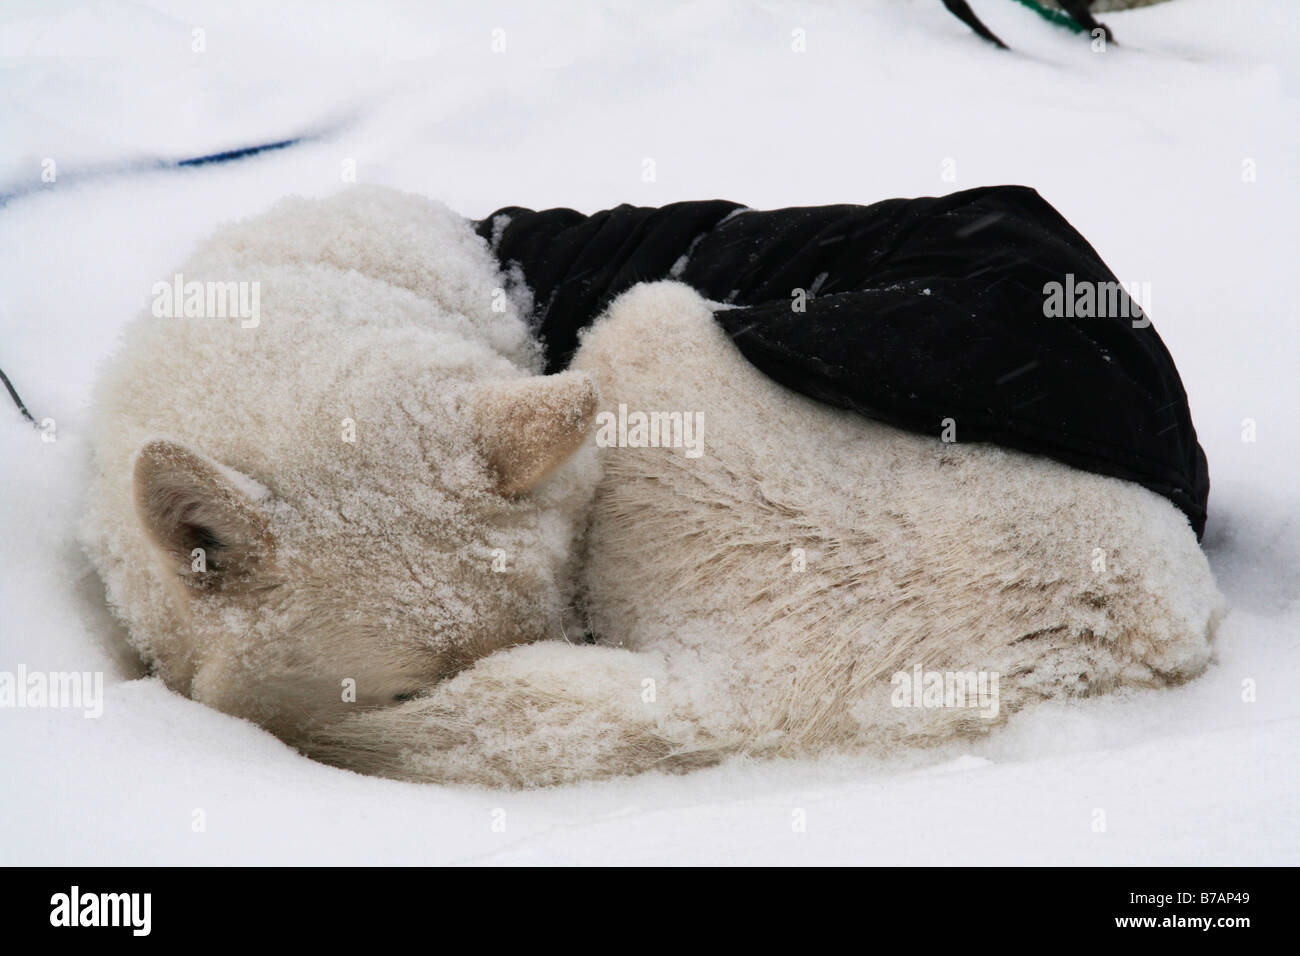 White curled up sleddog, sledge dog, snow covered, wearing insulating jacket, Mackenzie River Delta, Beaufort Sea, Northwest Te Stock Photo